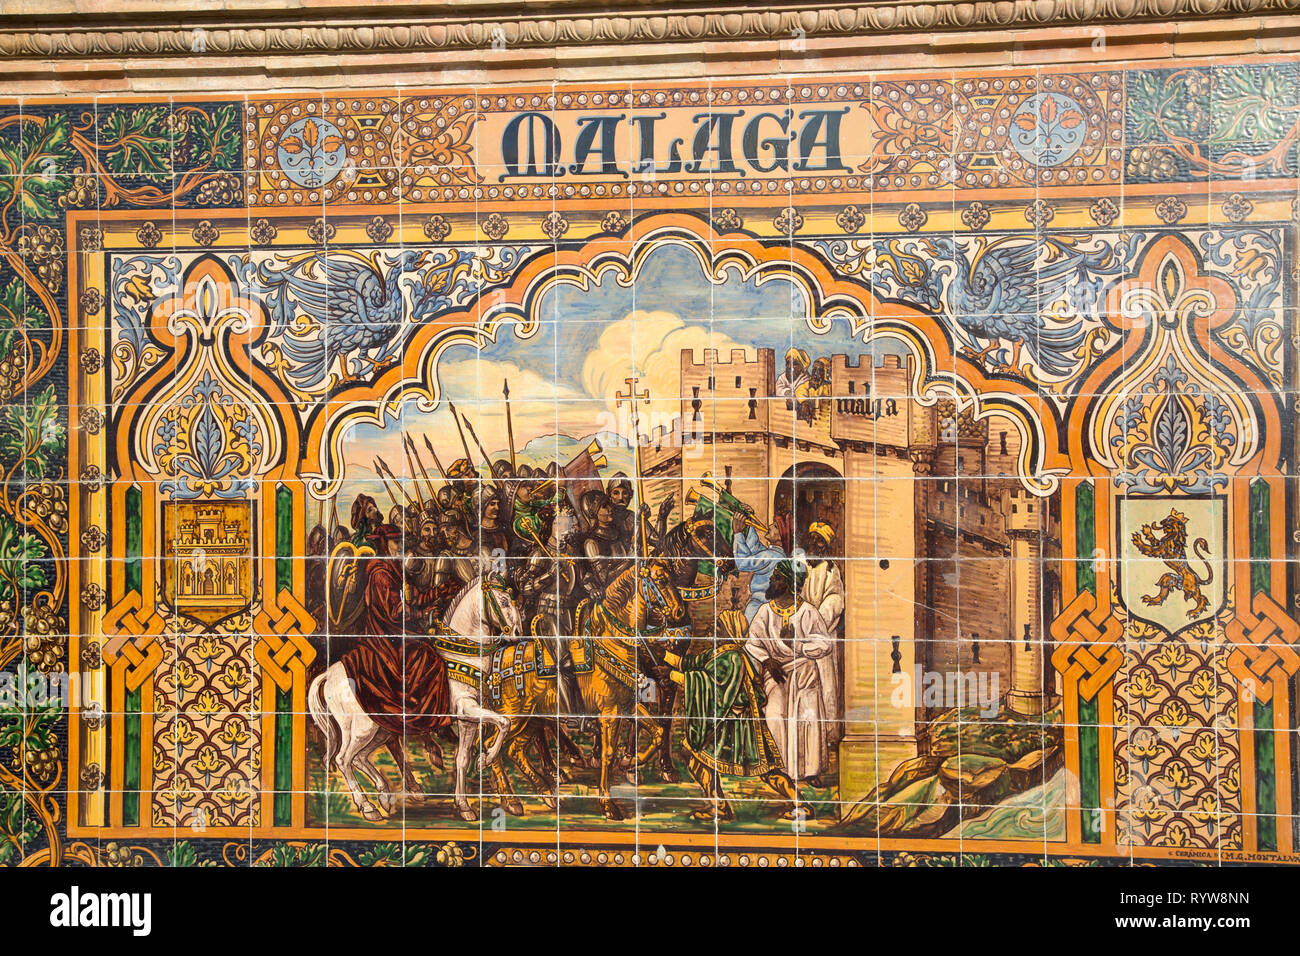 Malaga Sign; Plaza de Espana Square; Seville; Spain Stock Photo